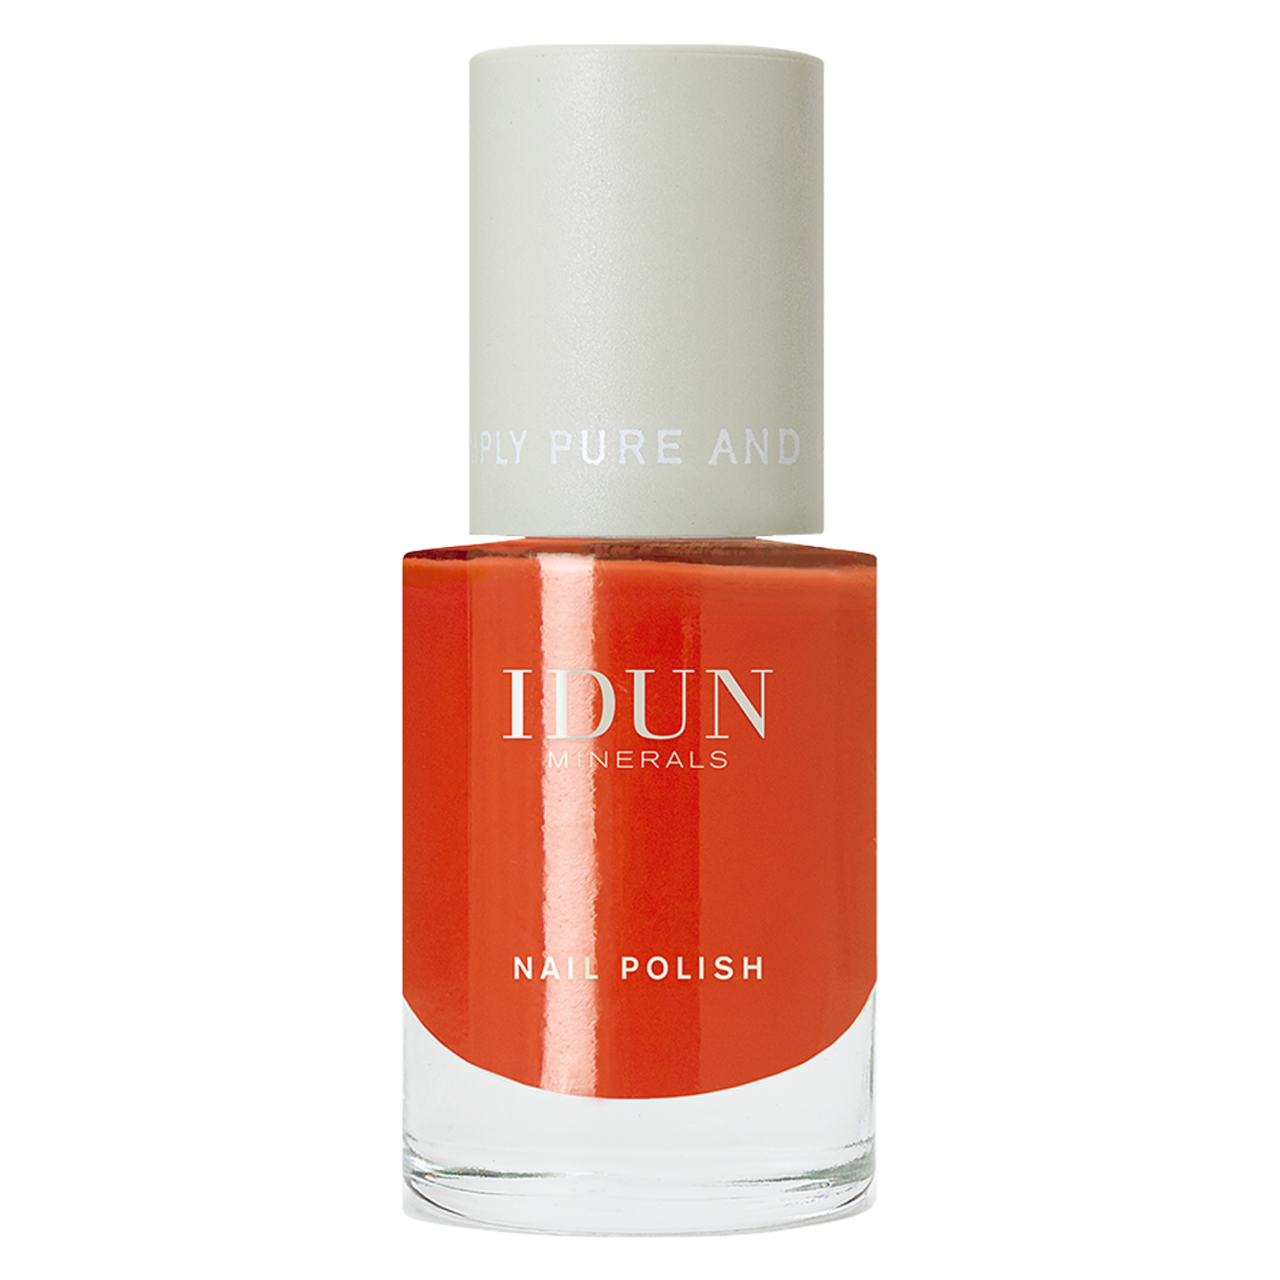 IDUN Nails - Nail Polish Karneol Scarlet Orange von IDUN MINERALS